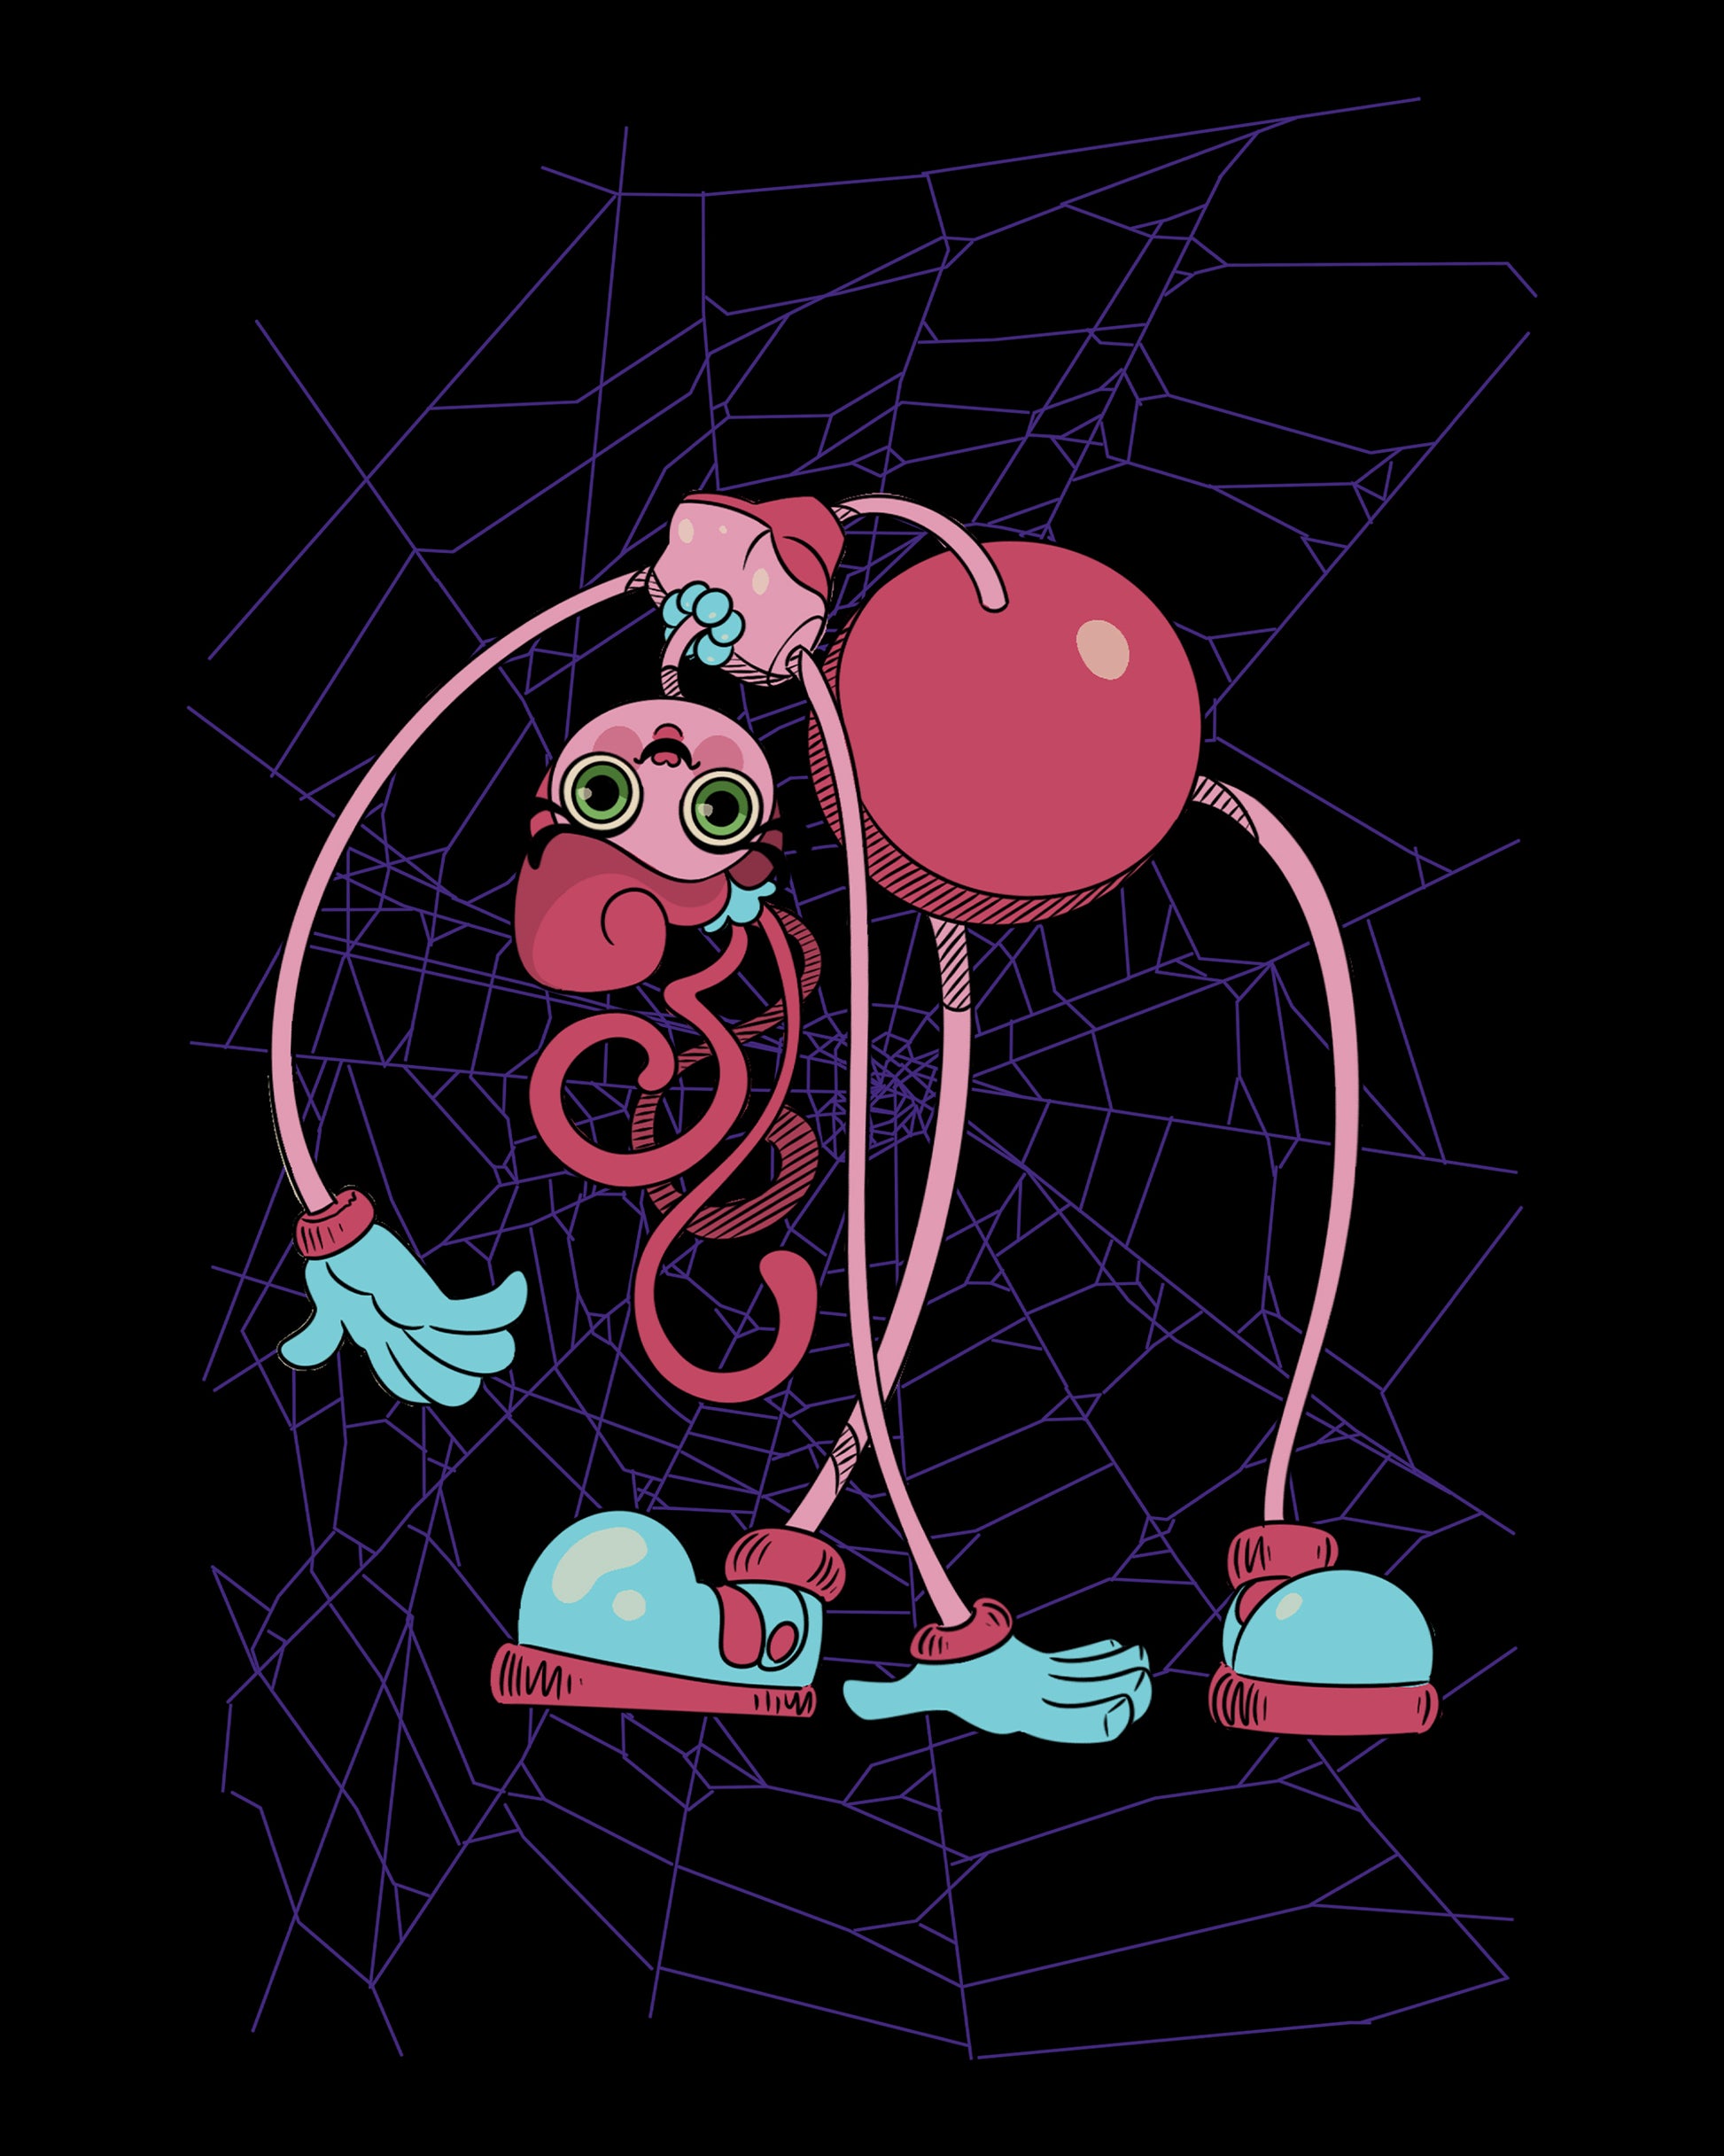 image on shirt: mommy longlegsl turned upside down with spider web background